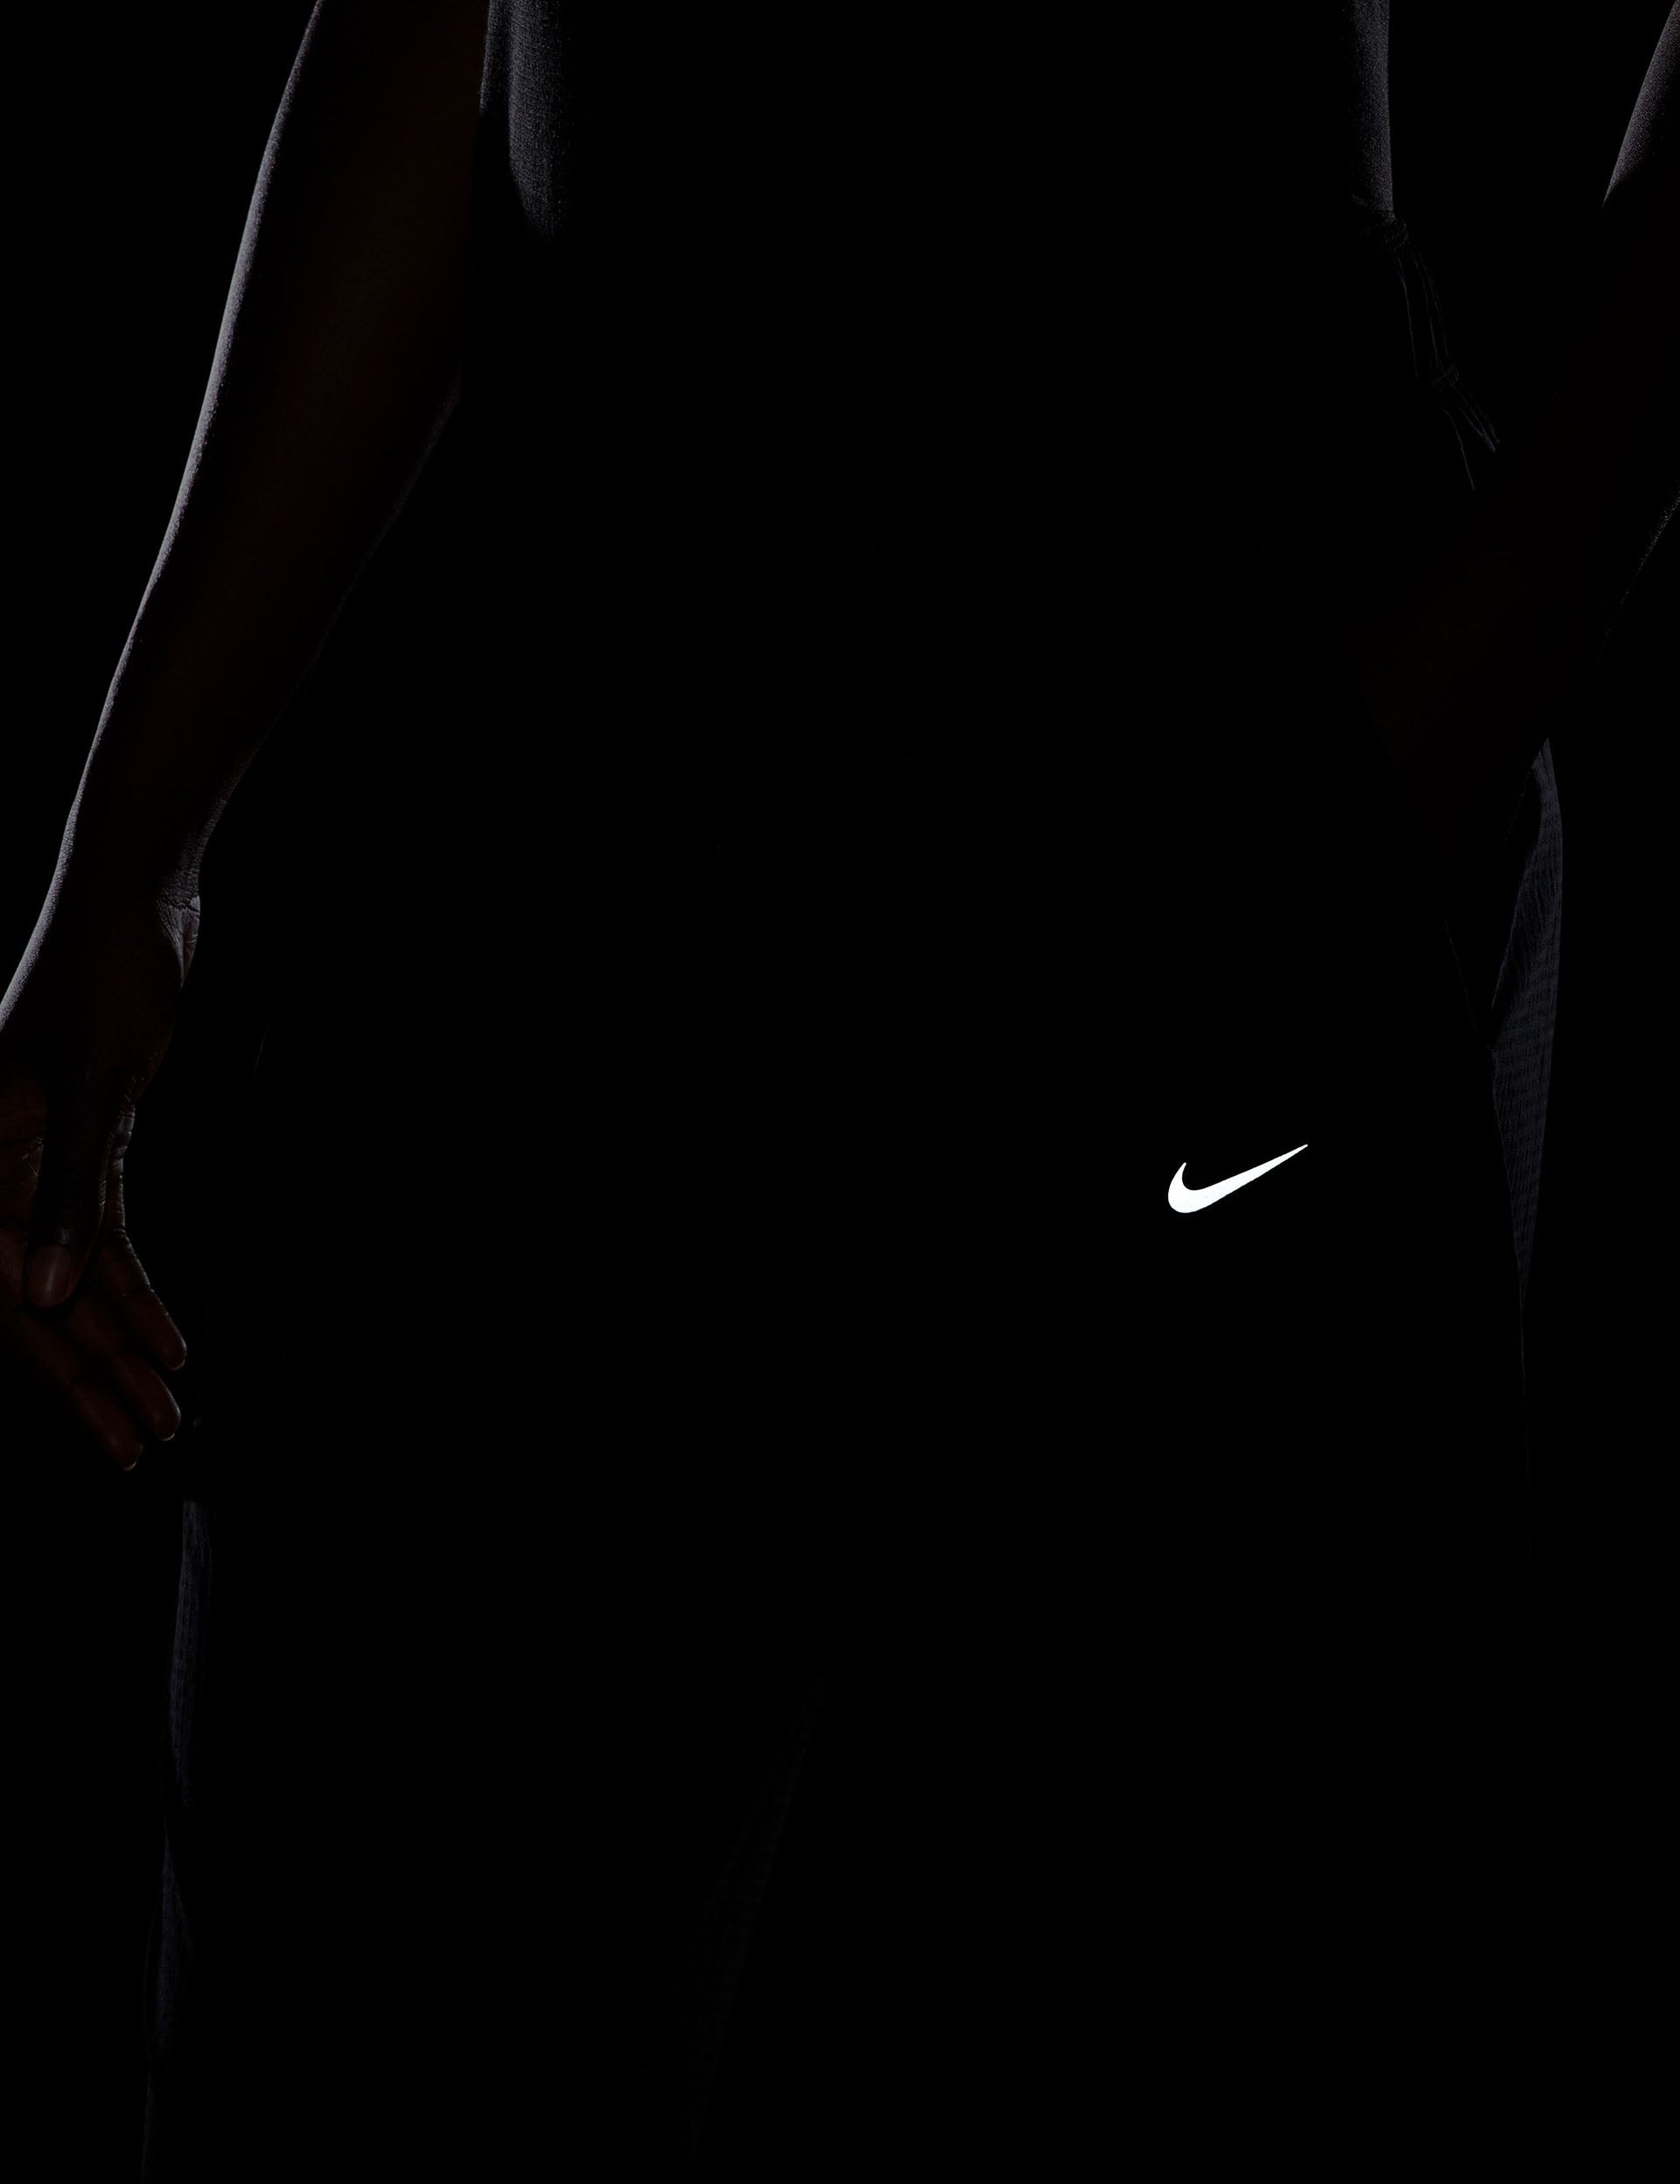 Buy Nike Dri-FIT Fast Women's Mid-Rise 7/8 Running Pants Online in